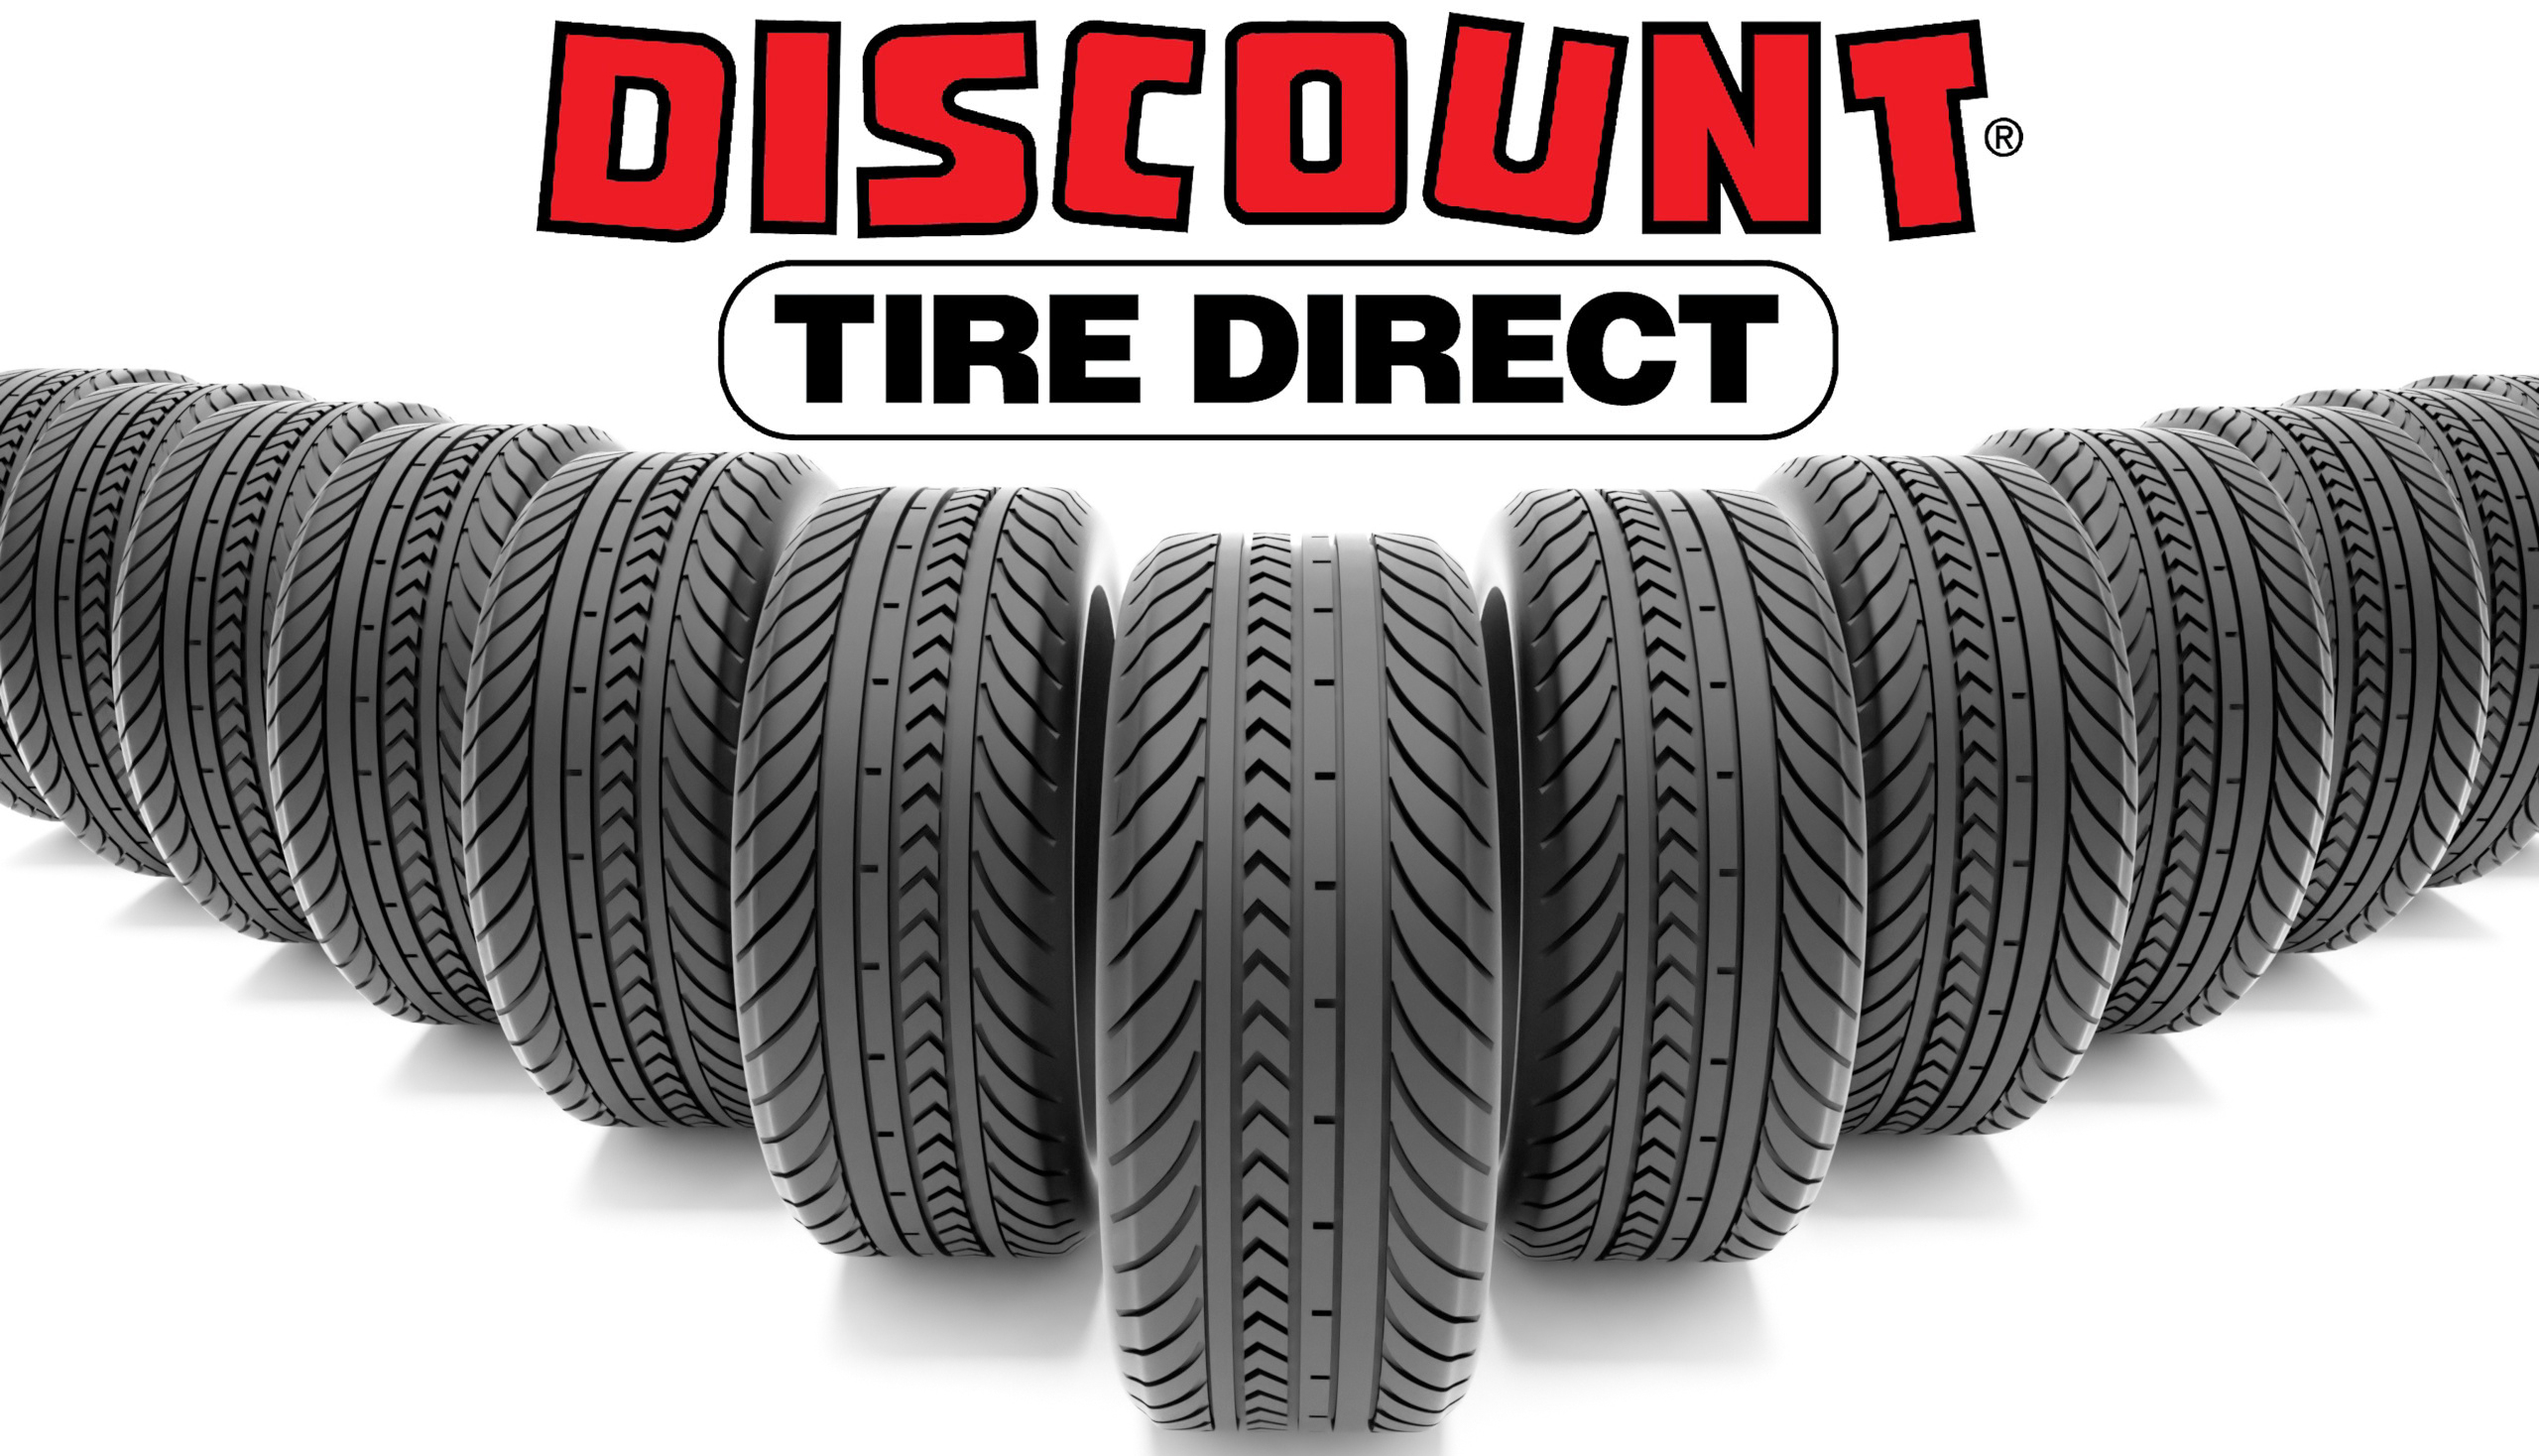 Discount Tire Direct Memorial Day Sale w/ Rebates - Slickdeals.net